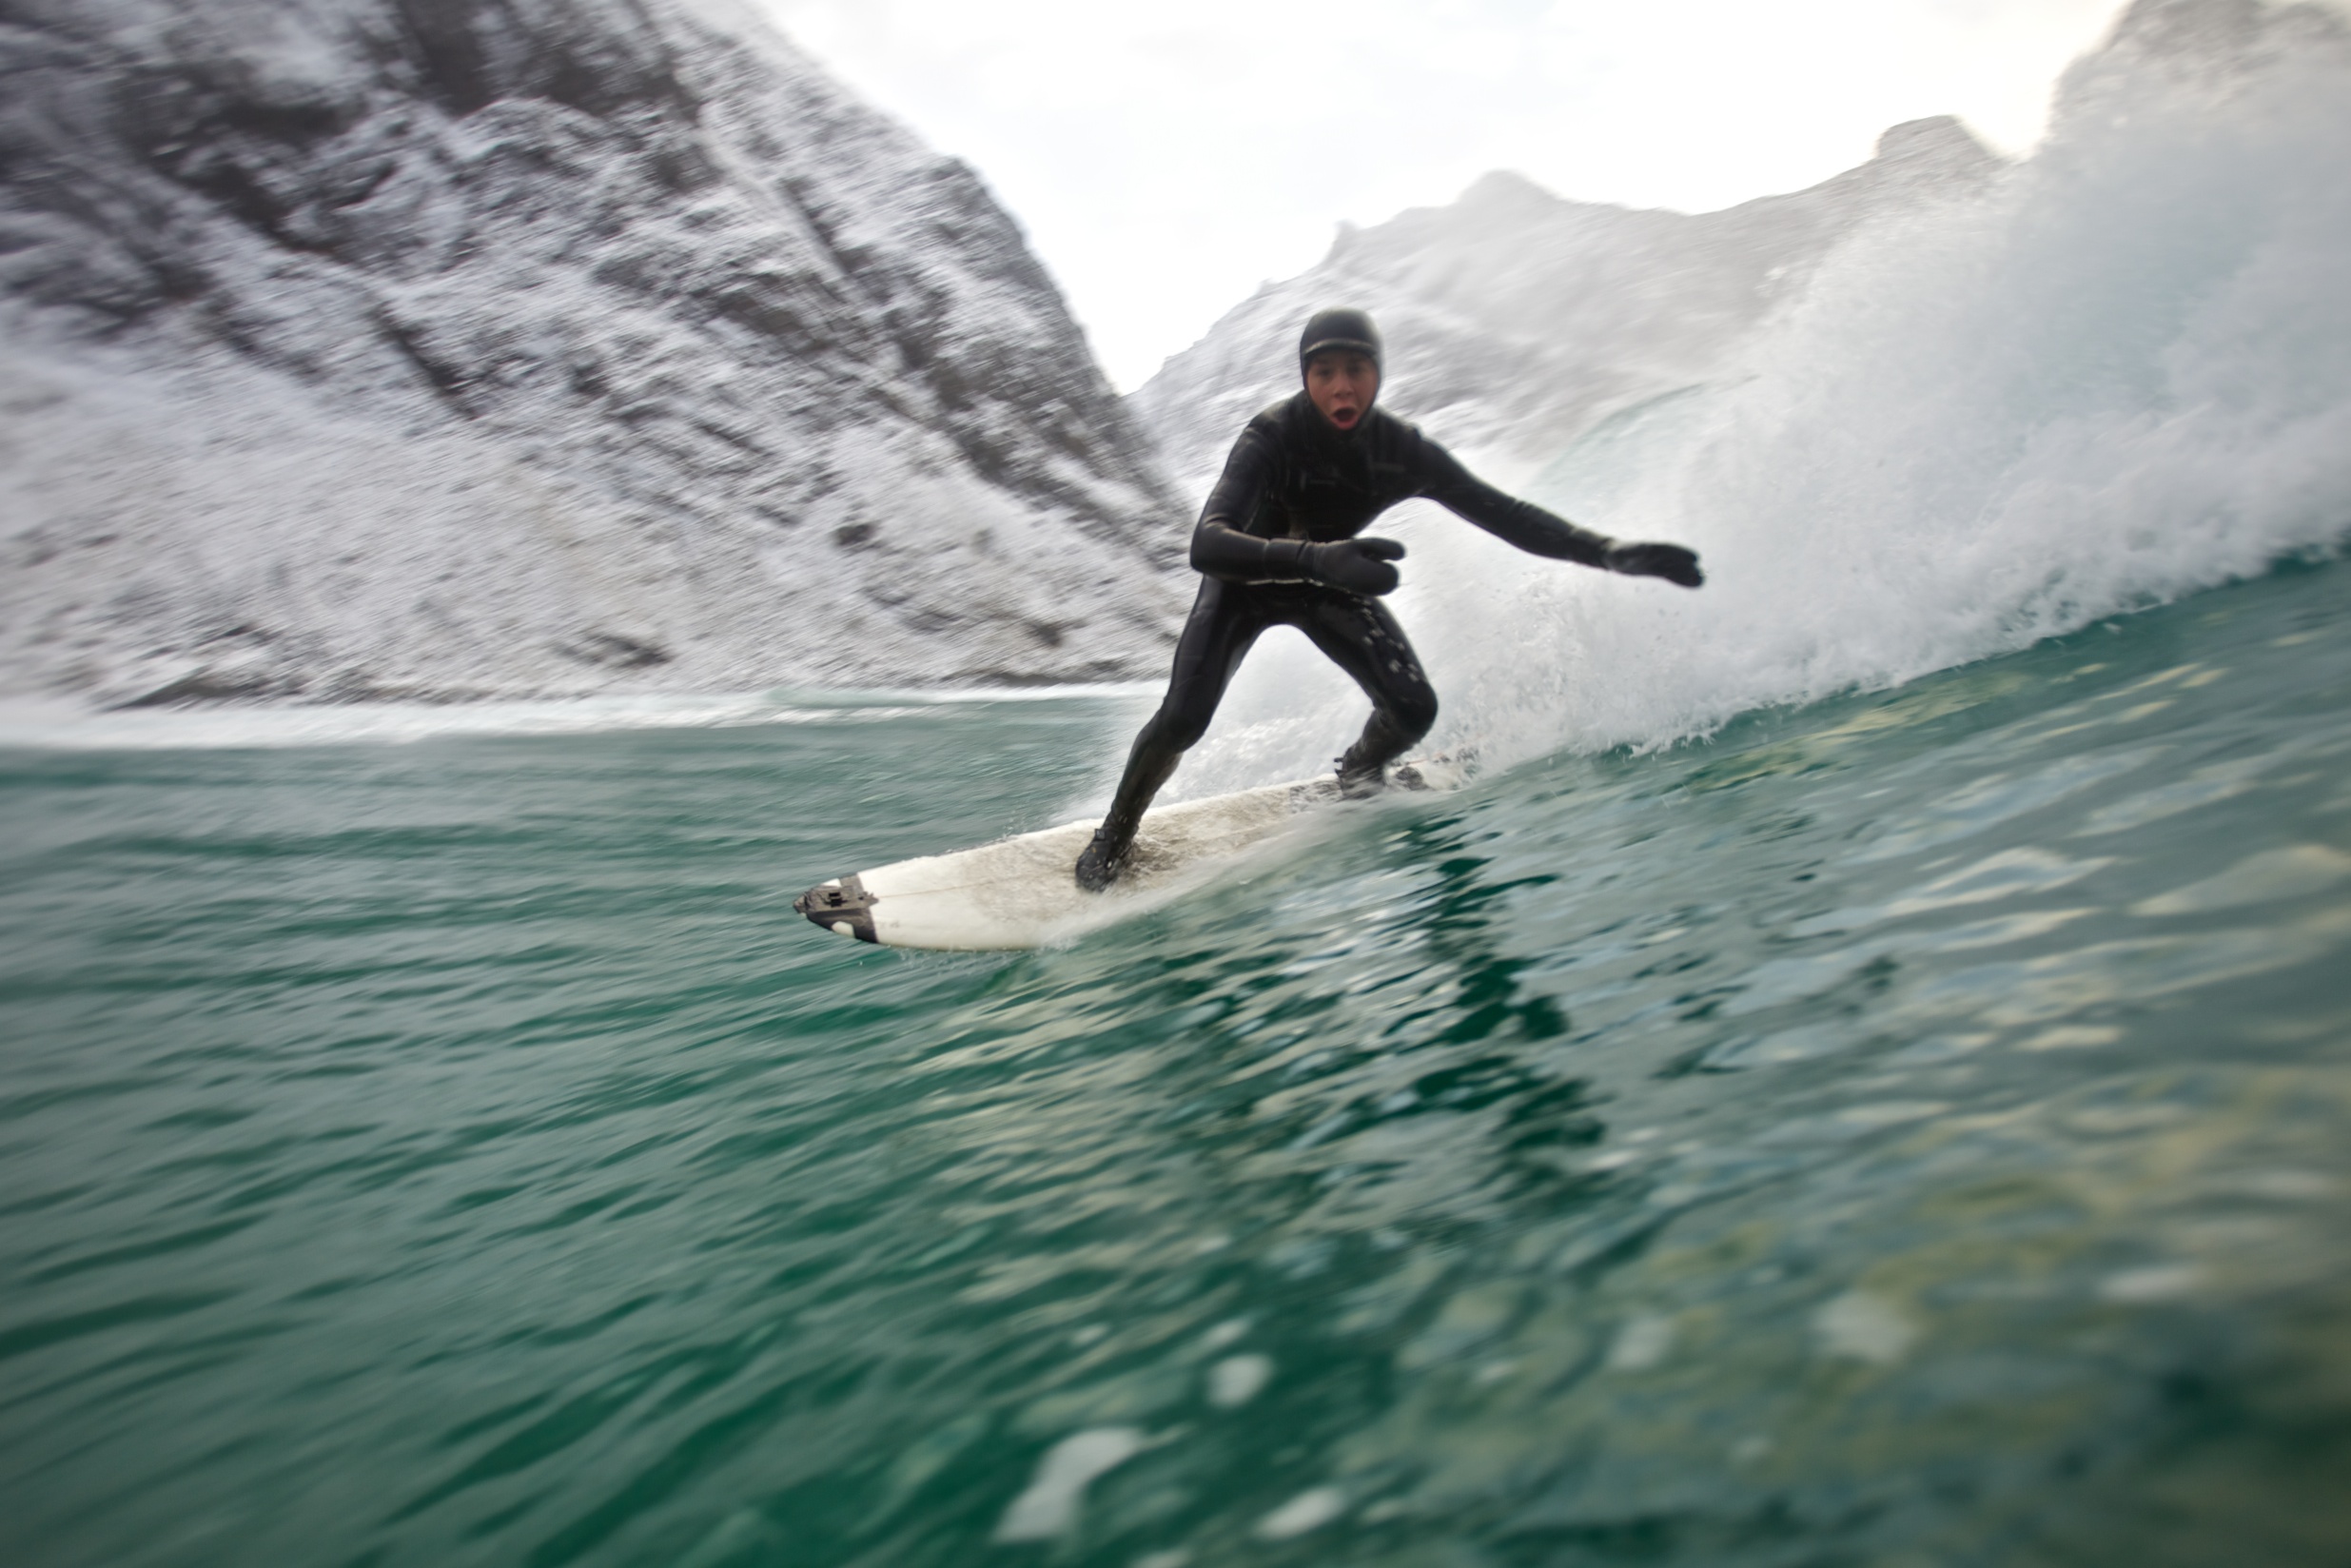 North Atlantic surf film wins 2013 Banff Mountain Film Competition